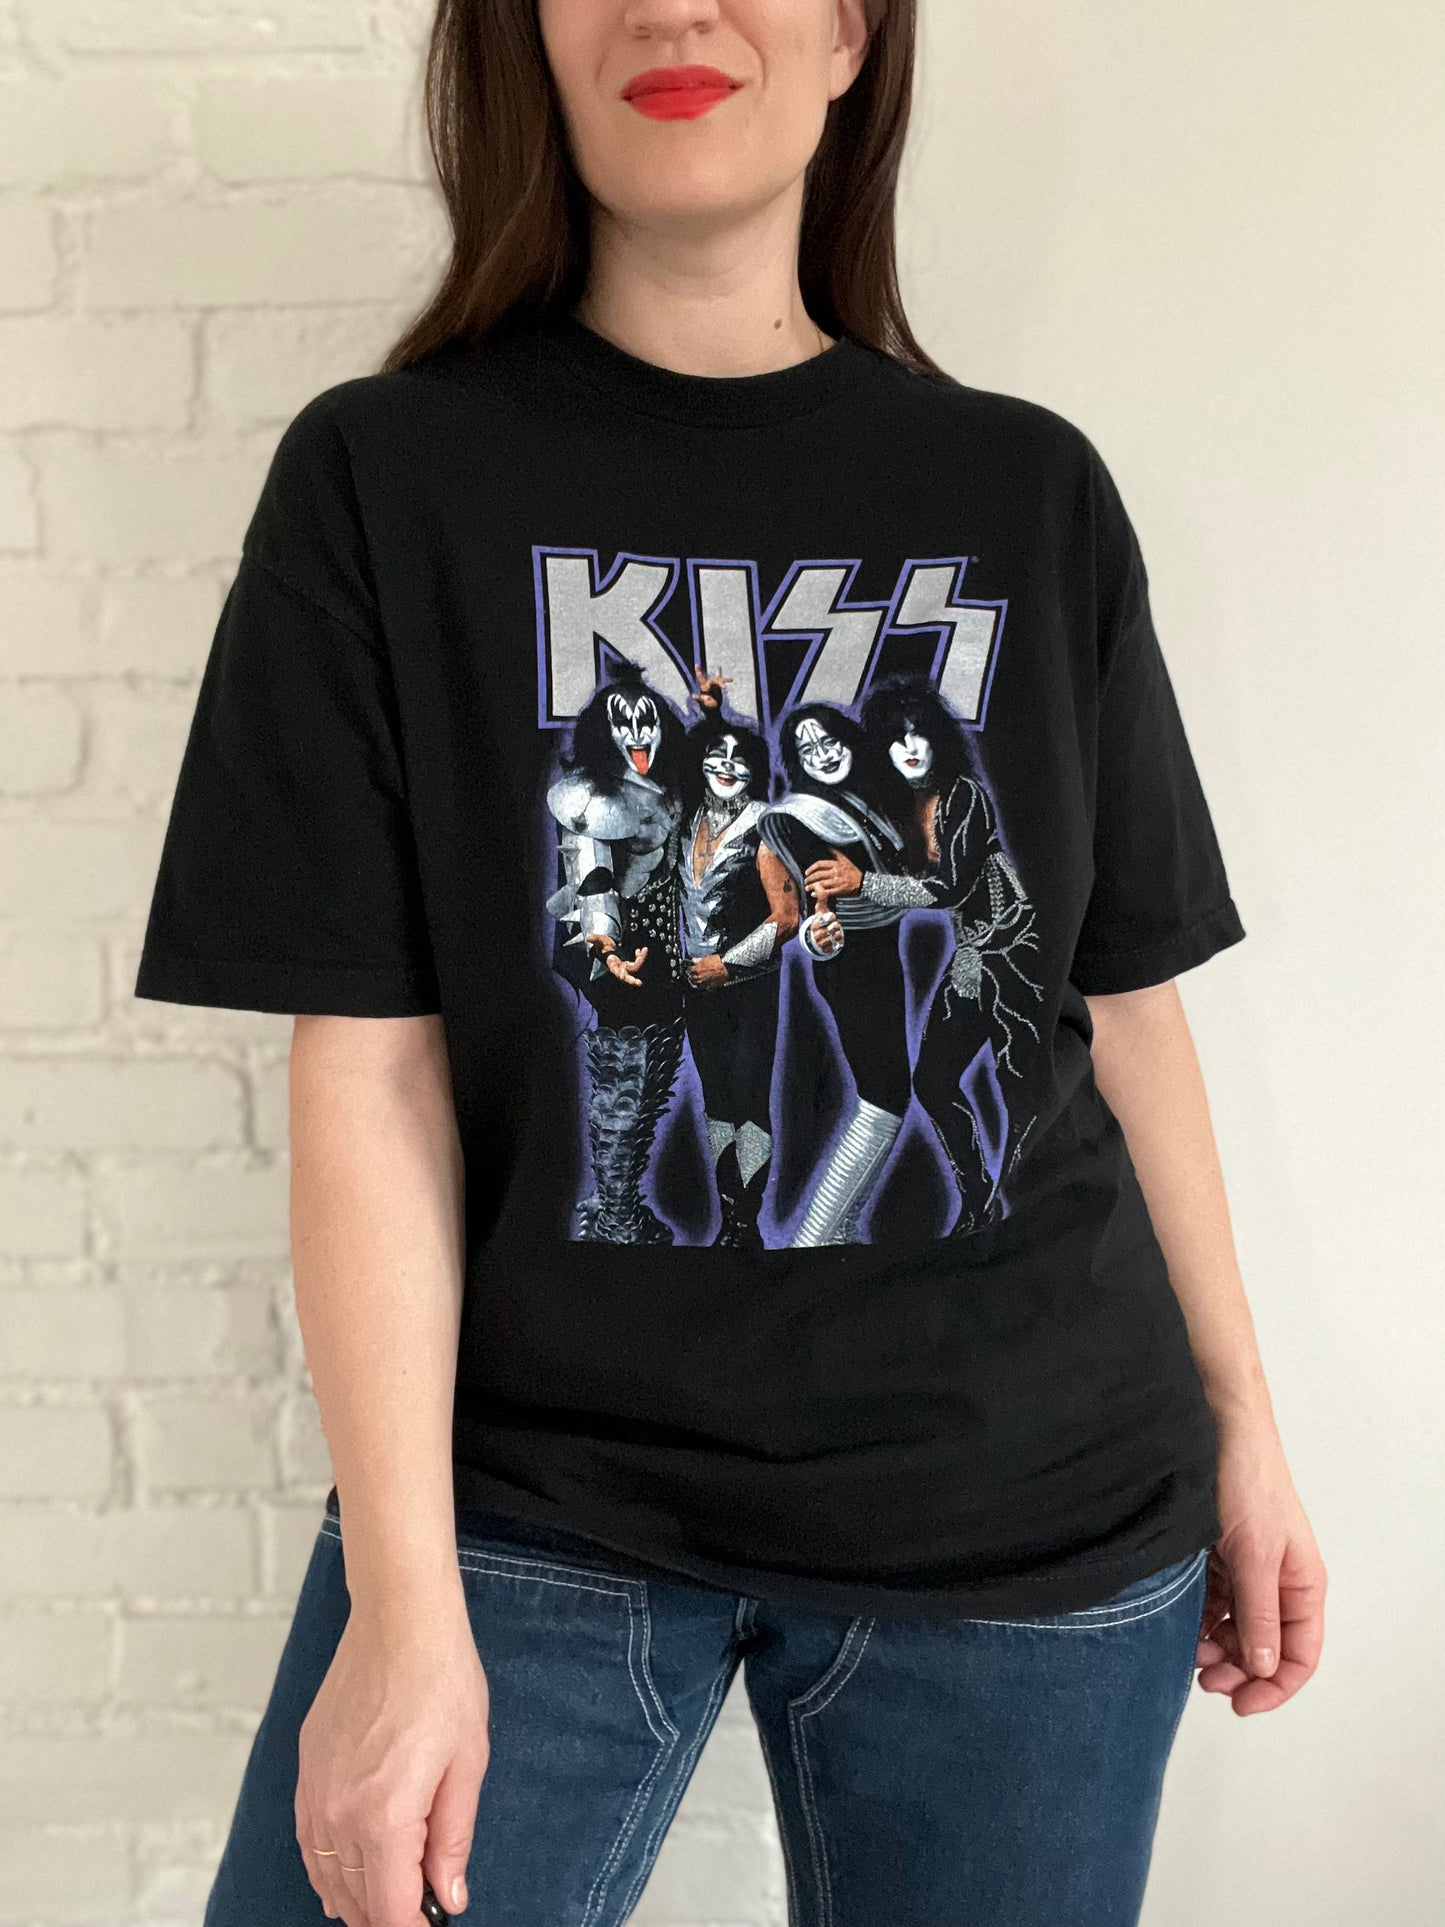 2005 KISS Authentic Concert T-Shirt - Mens XL